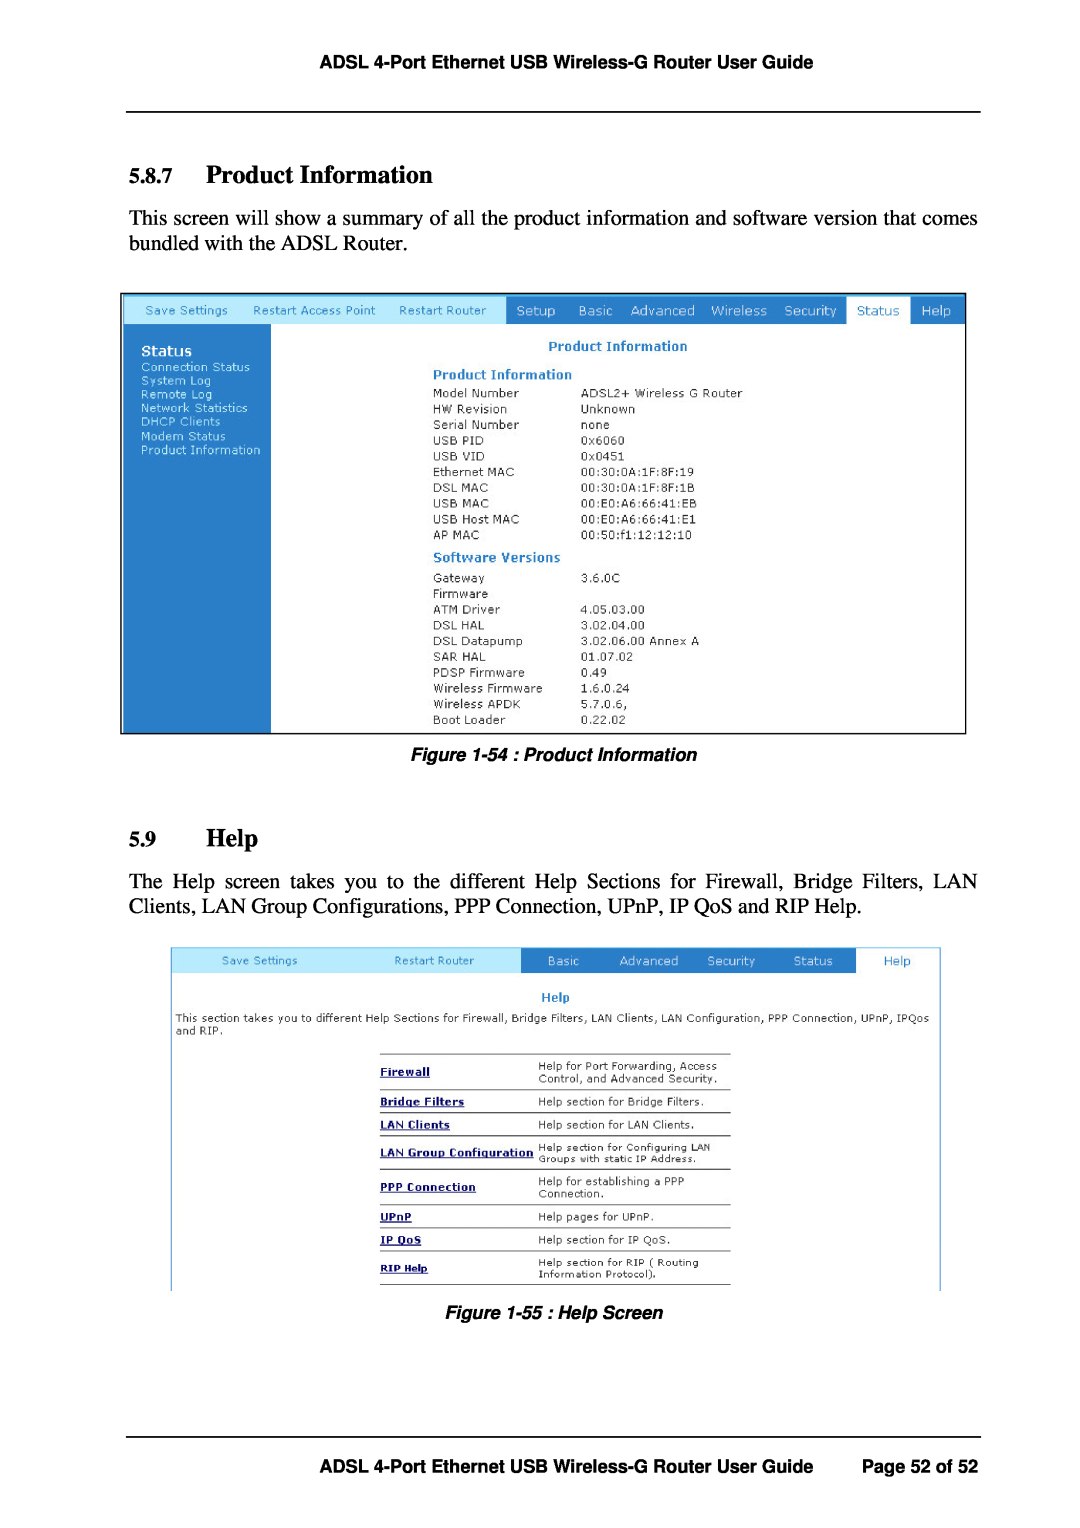 APC ADSL 4-Port manual 54 Product Information, 55 Help Screen 